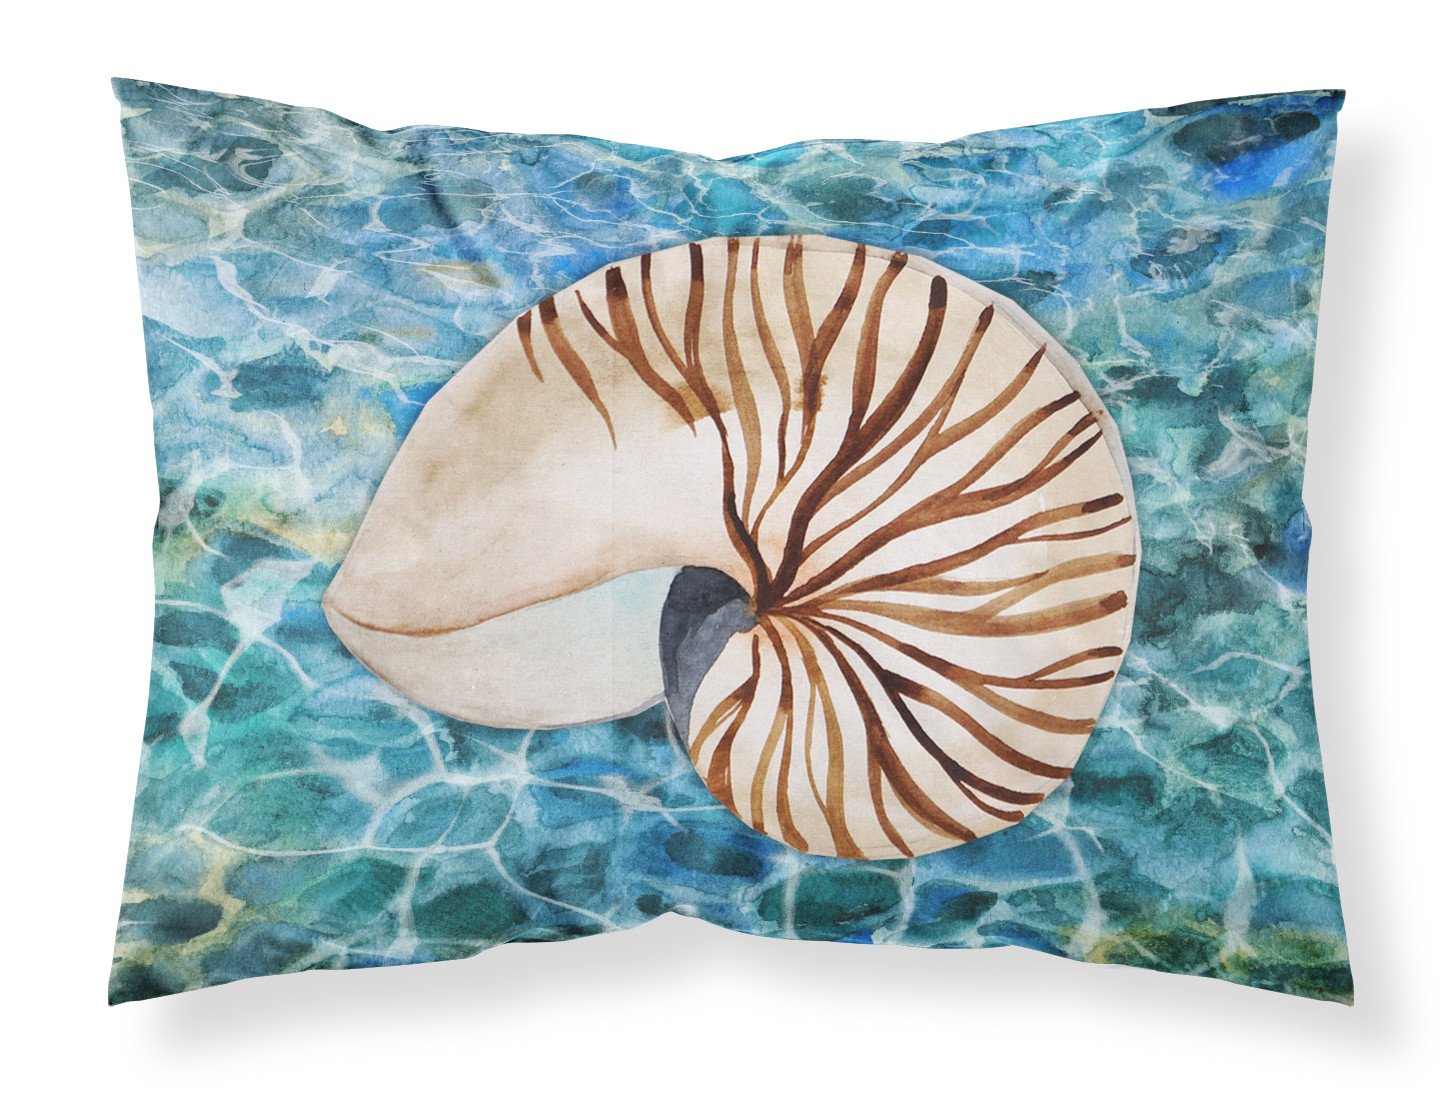 Sea Shell and Water Fabric Standard Pillowcase BB5368PILLOWCASE by Caroline's Treasures